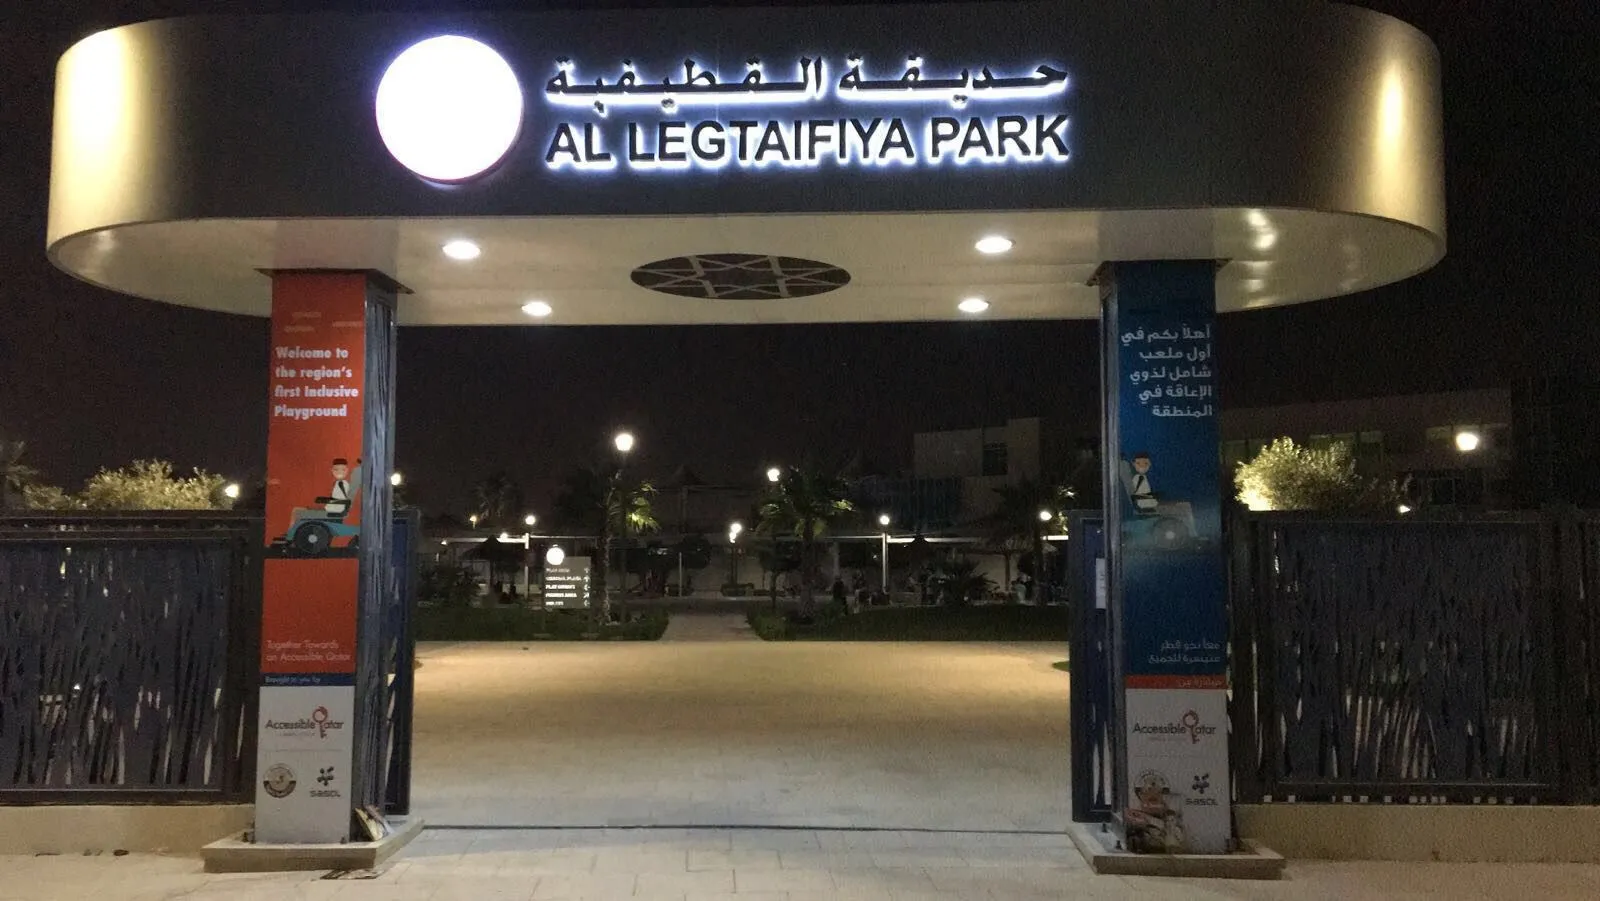 Al Legtaifiya Park in Qatar